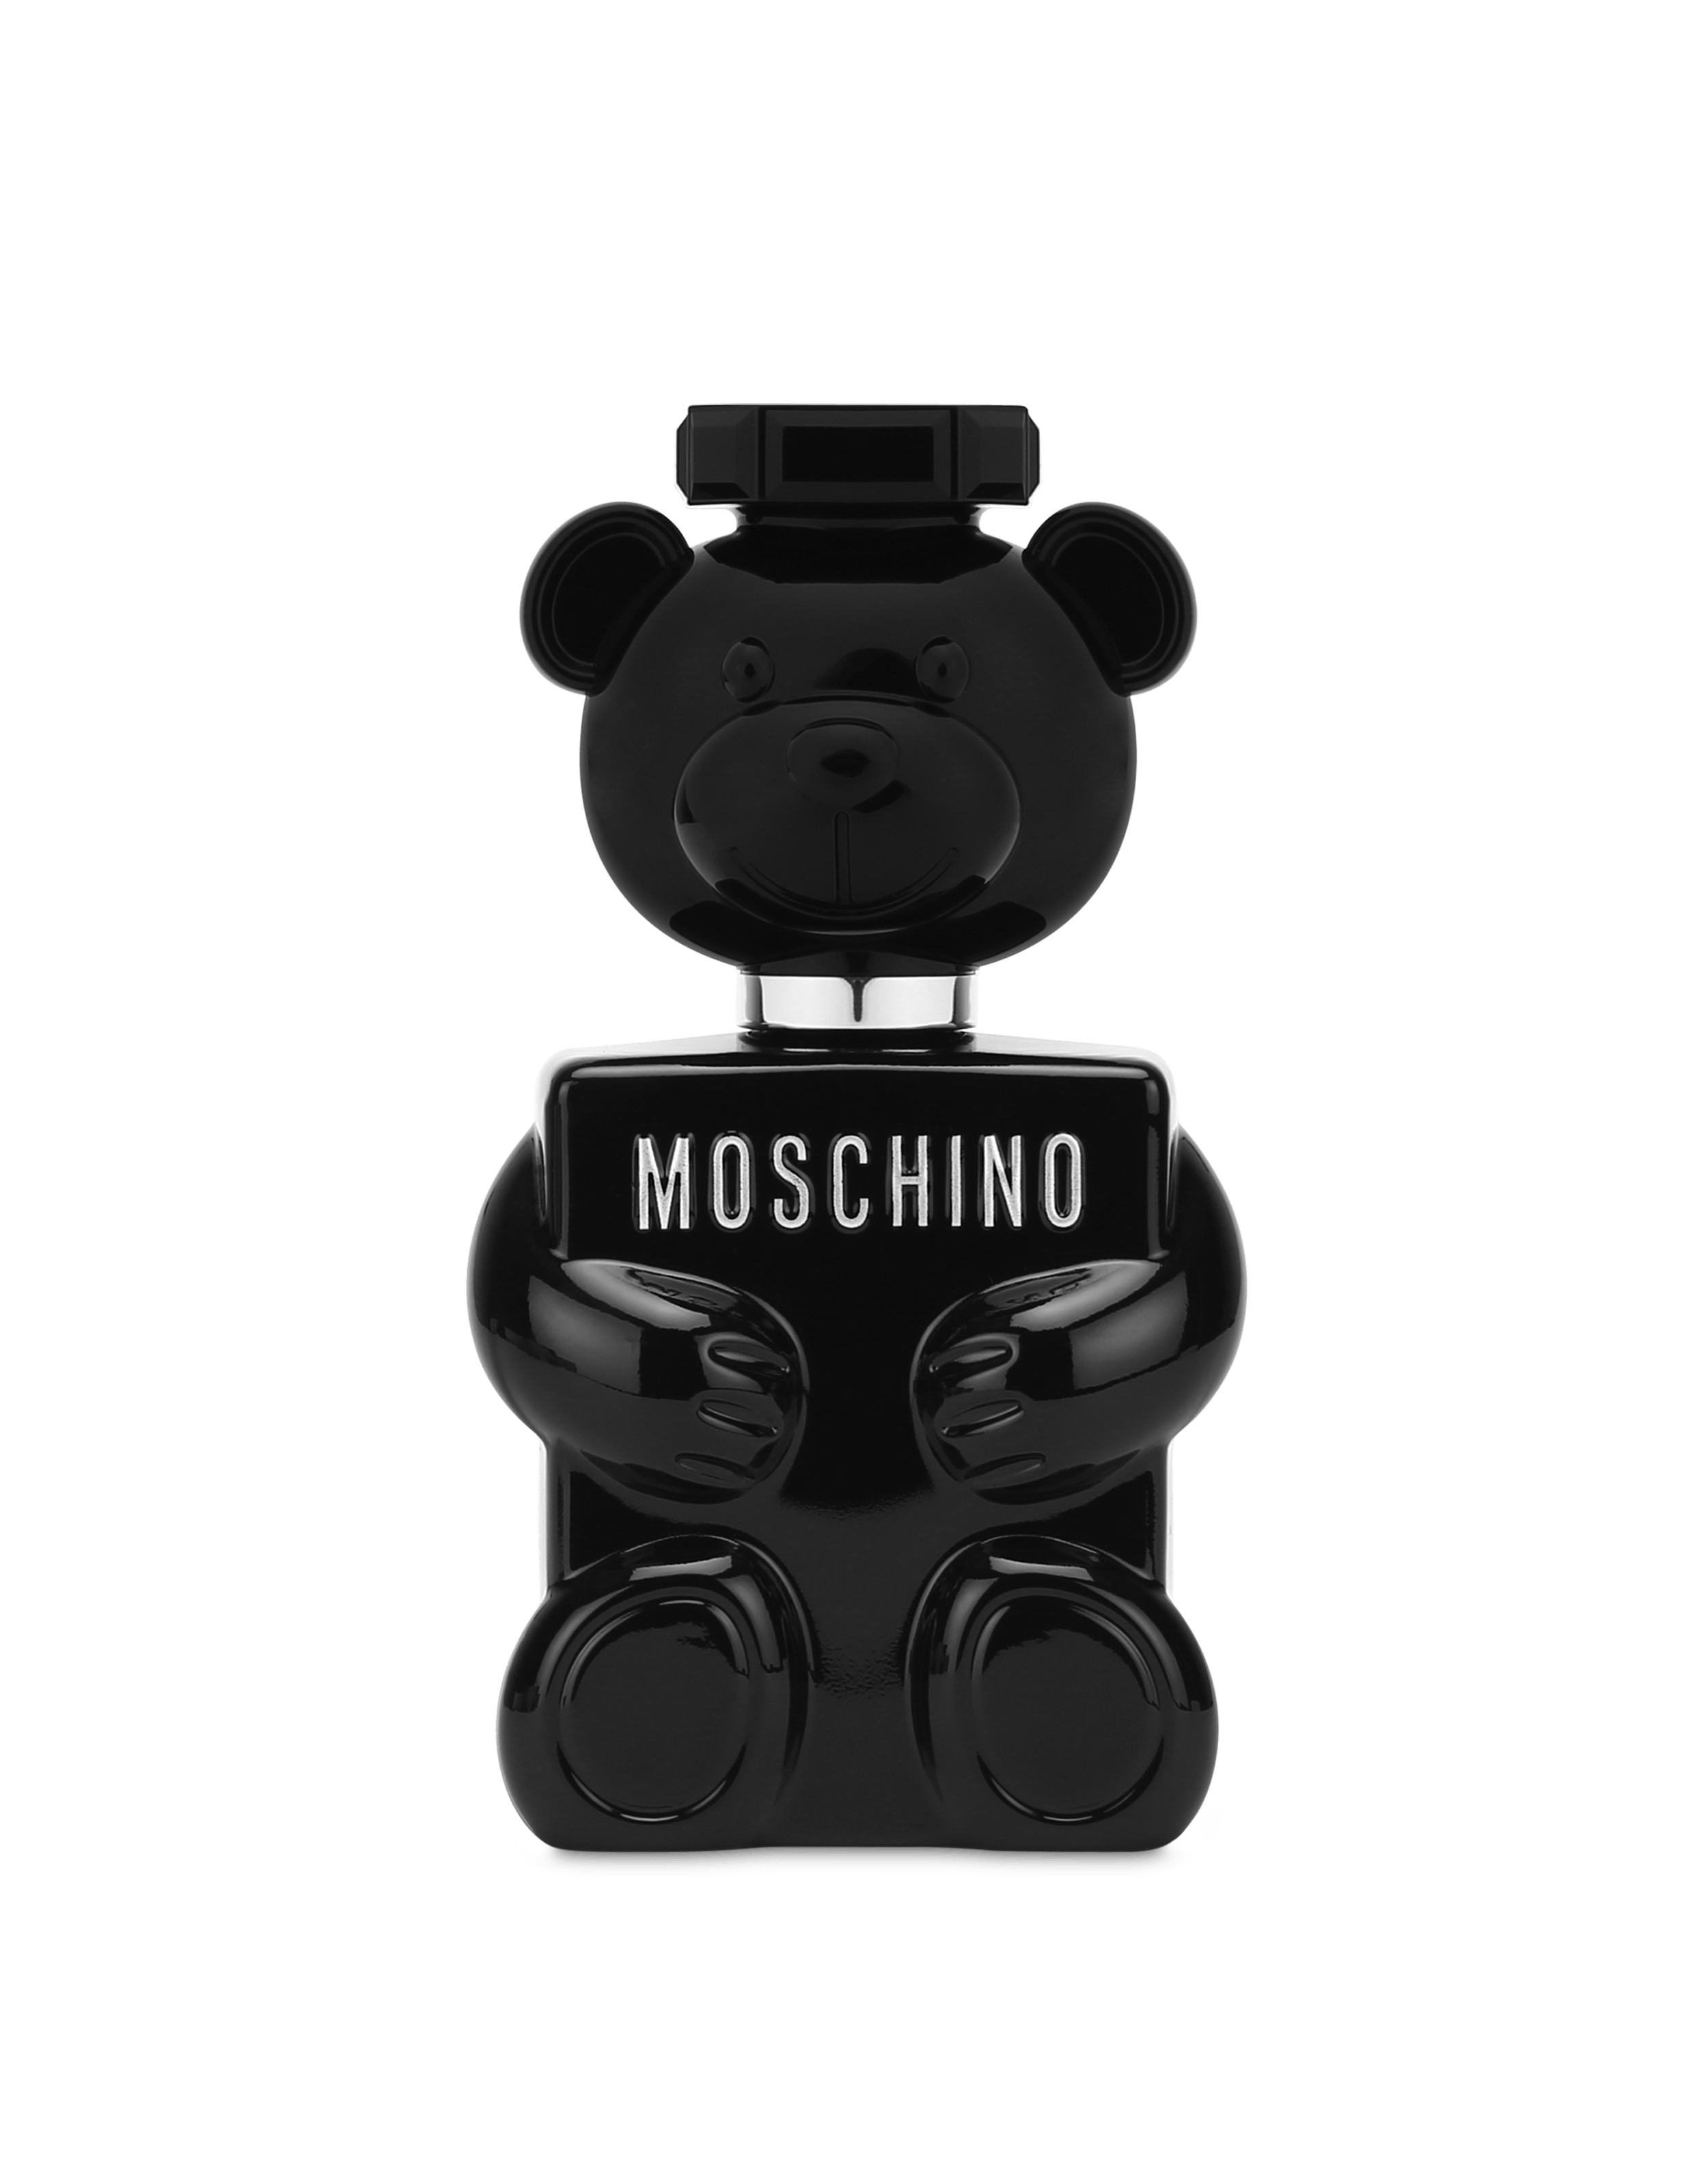 moschino toy boy fragrance